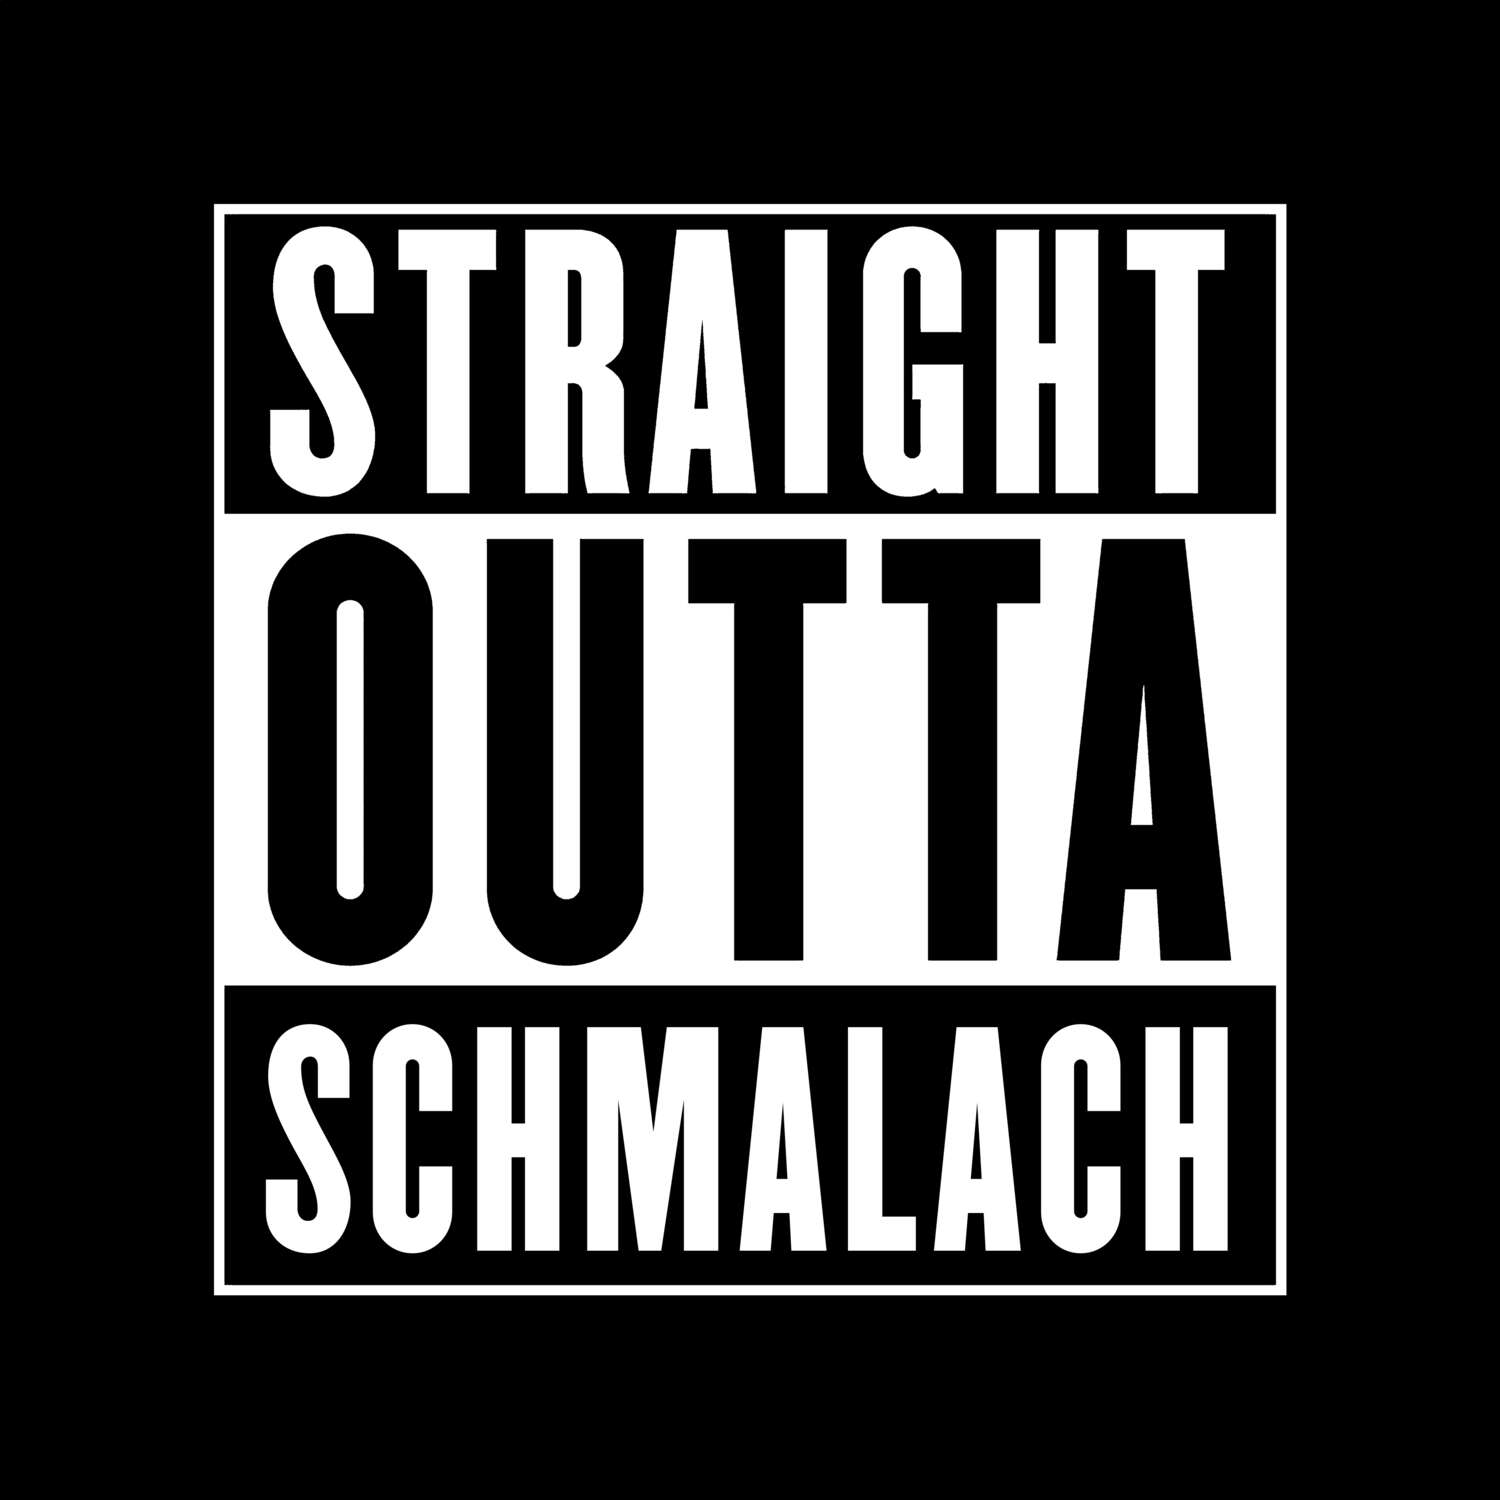 Schmalach T-Shirt »Straight Outta«